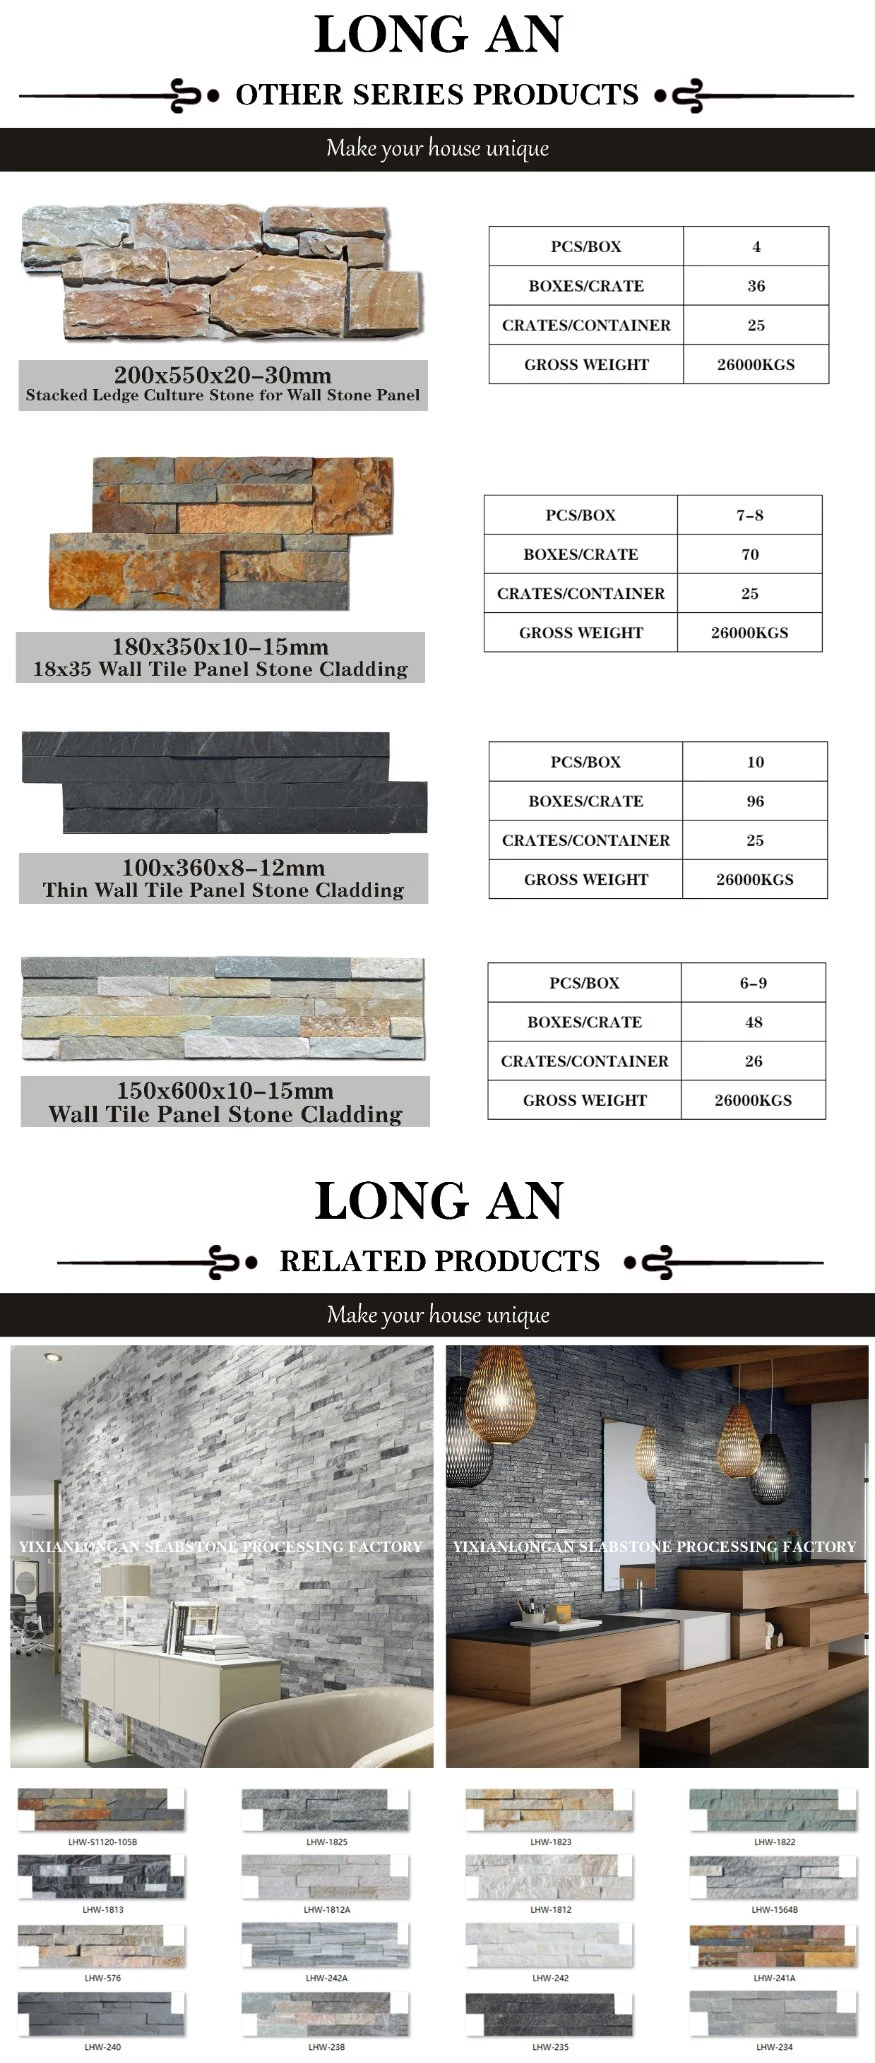 Super Thin Grey Quartz Stacked Ledge Culture Stone for Wall Stone Panel Z/S Shape